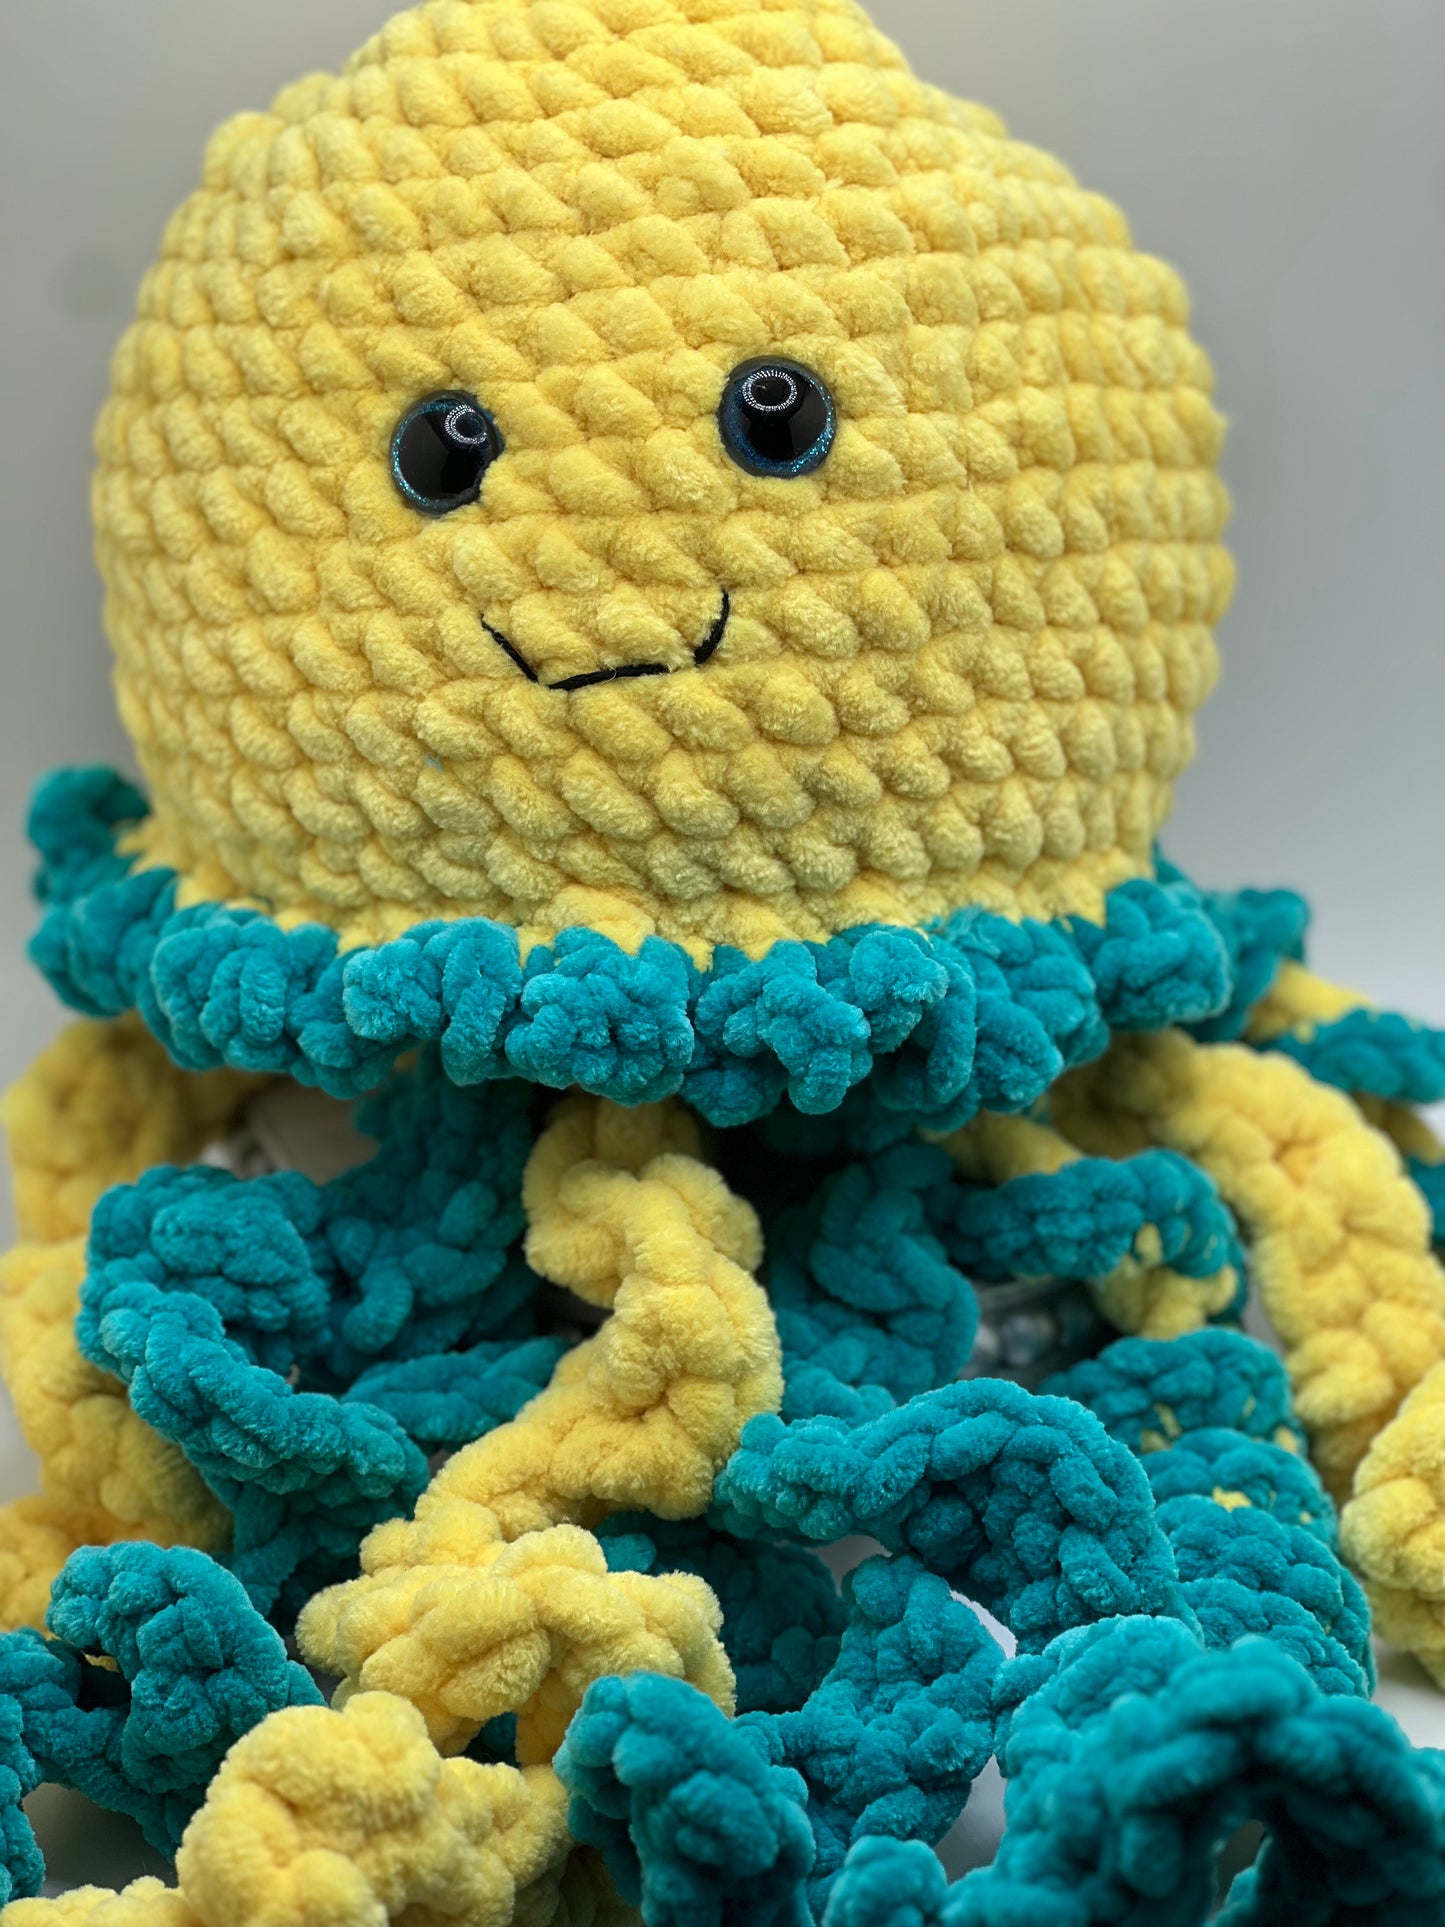 Stuffed Yellow Teal Big Jellyfish - Crochet Knitted Amigurumi Toy